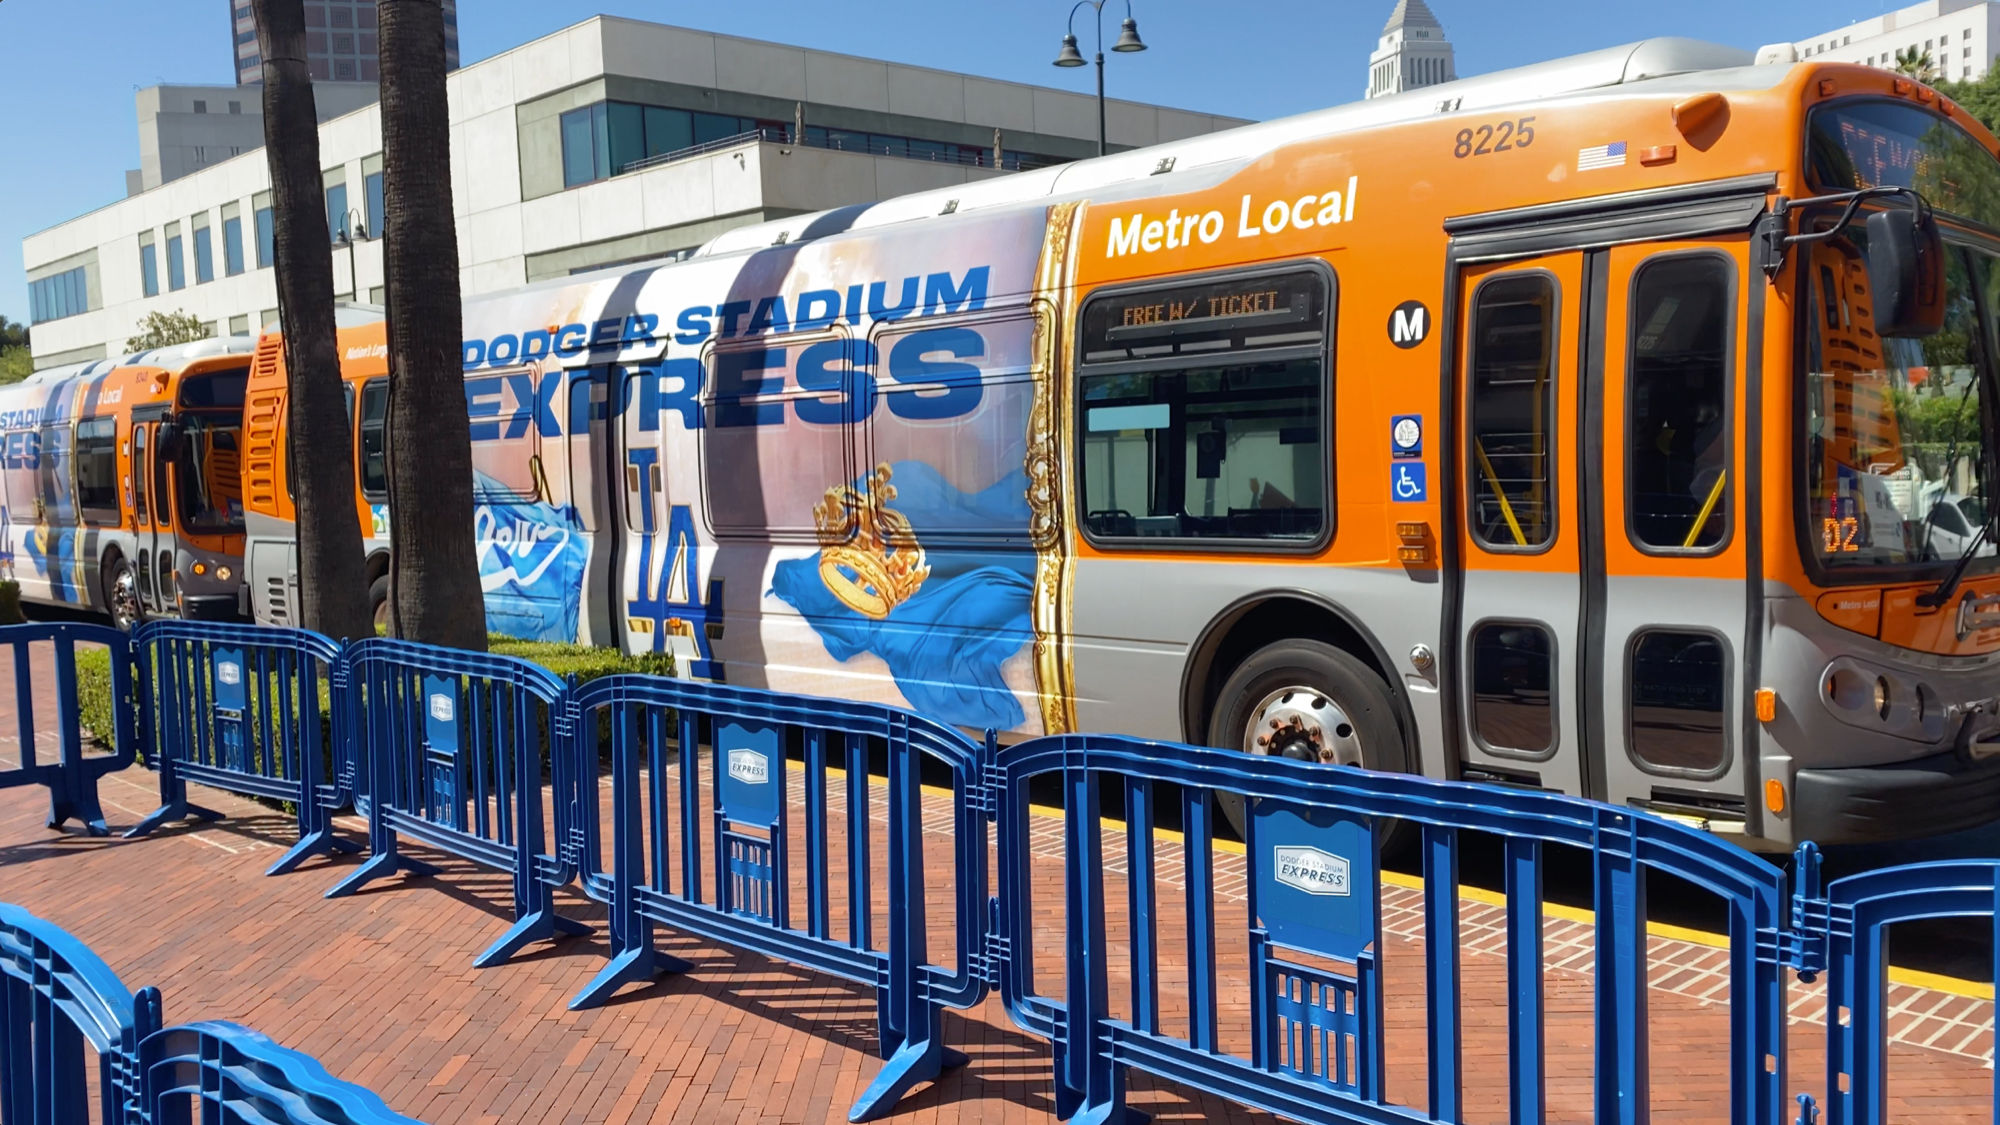 Dodger Stadium Express Buses